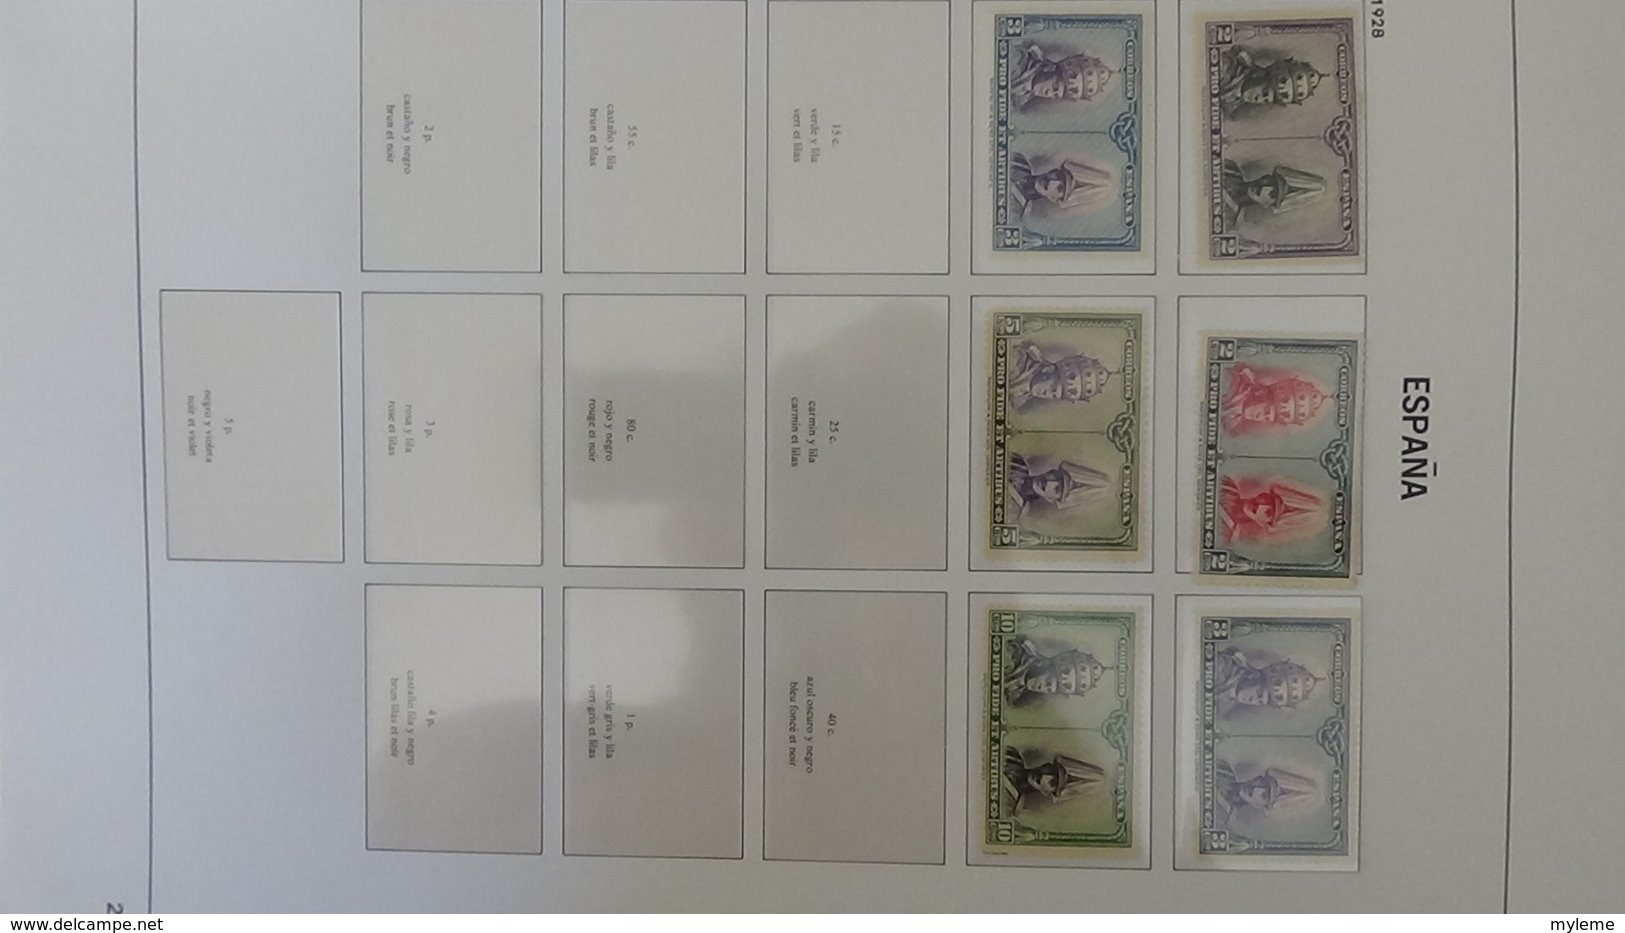 Collection ESPAGNE en DAVO de 1856 à 1941. A saisir !!!